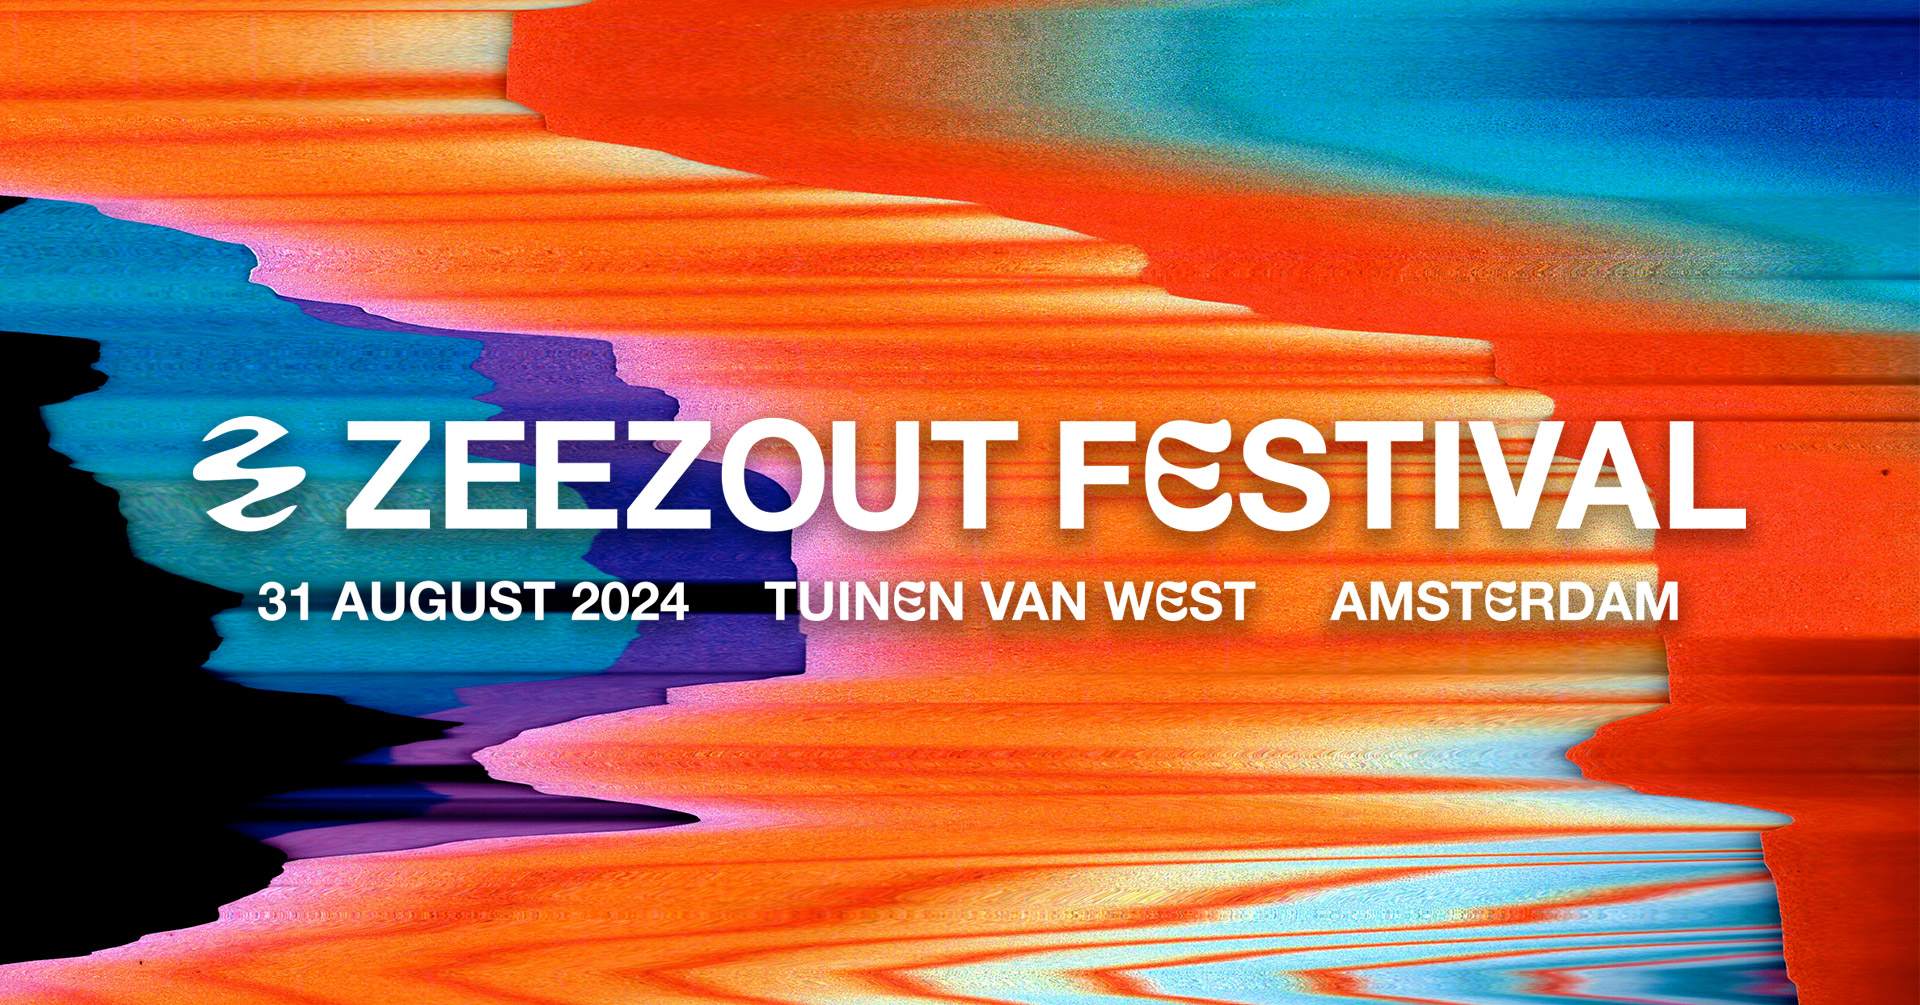 ZeeZout Festival 2024 - フライヤー表